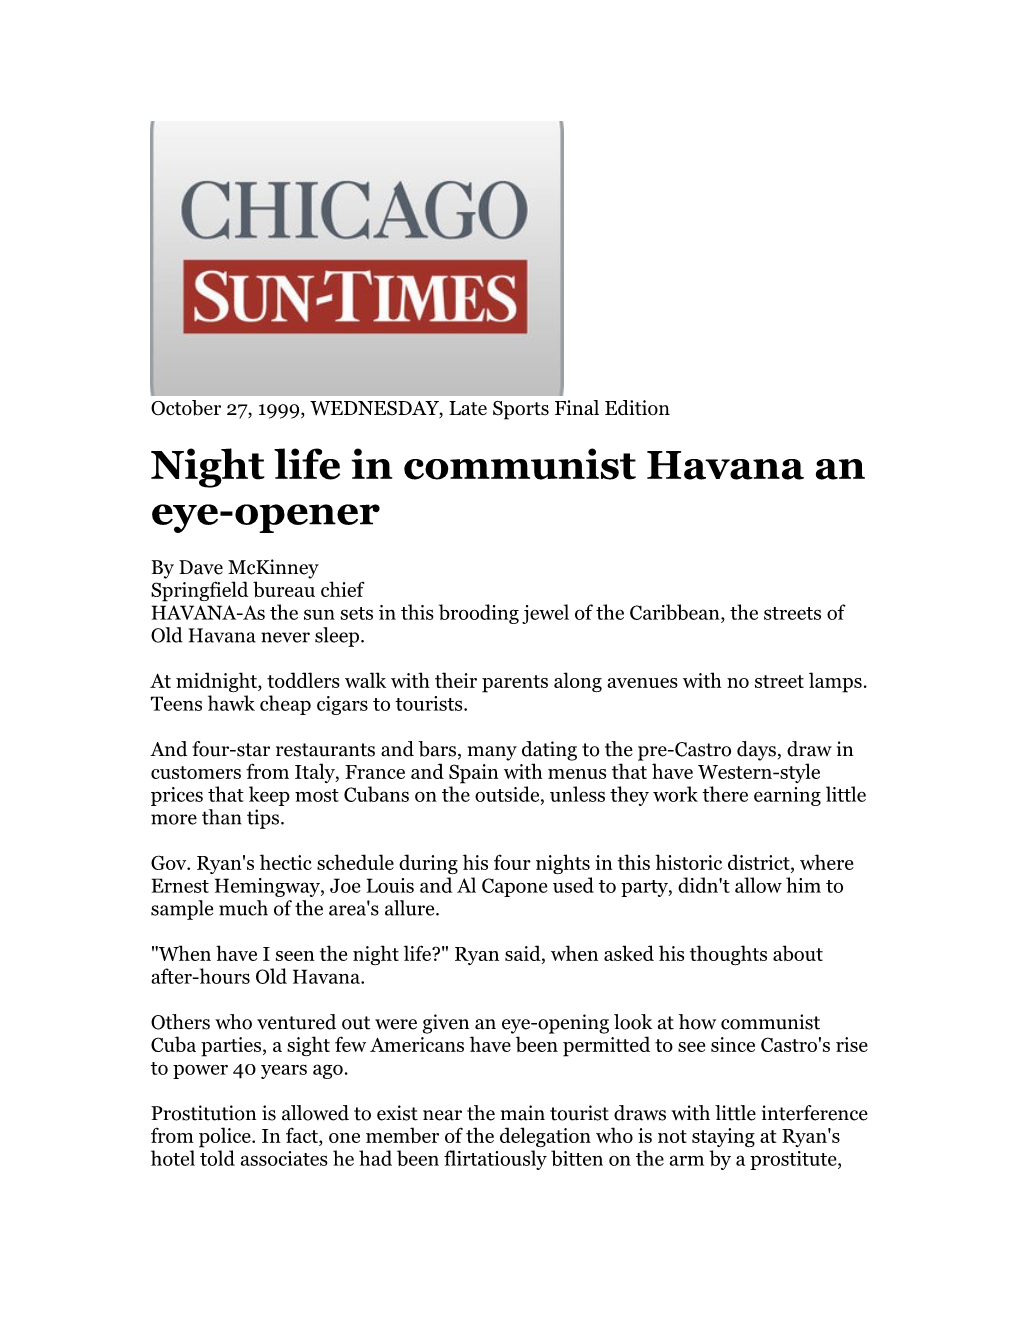 Night Life in Communist Havana an Eye-Opener